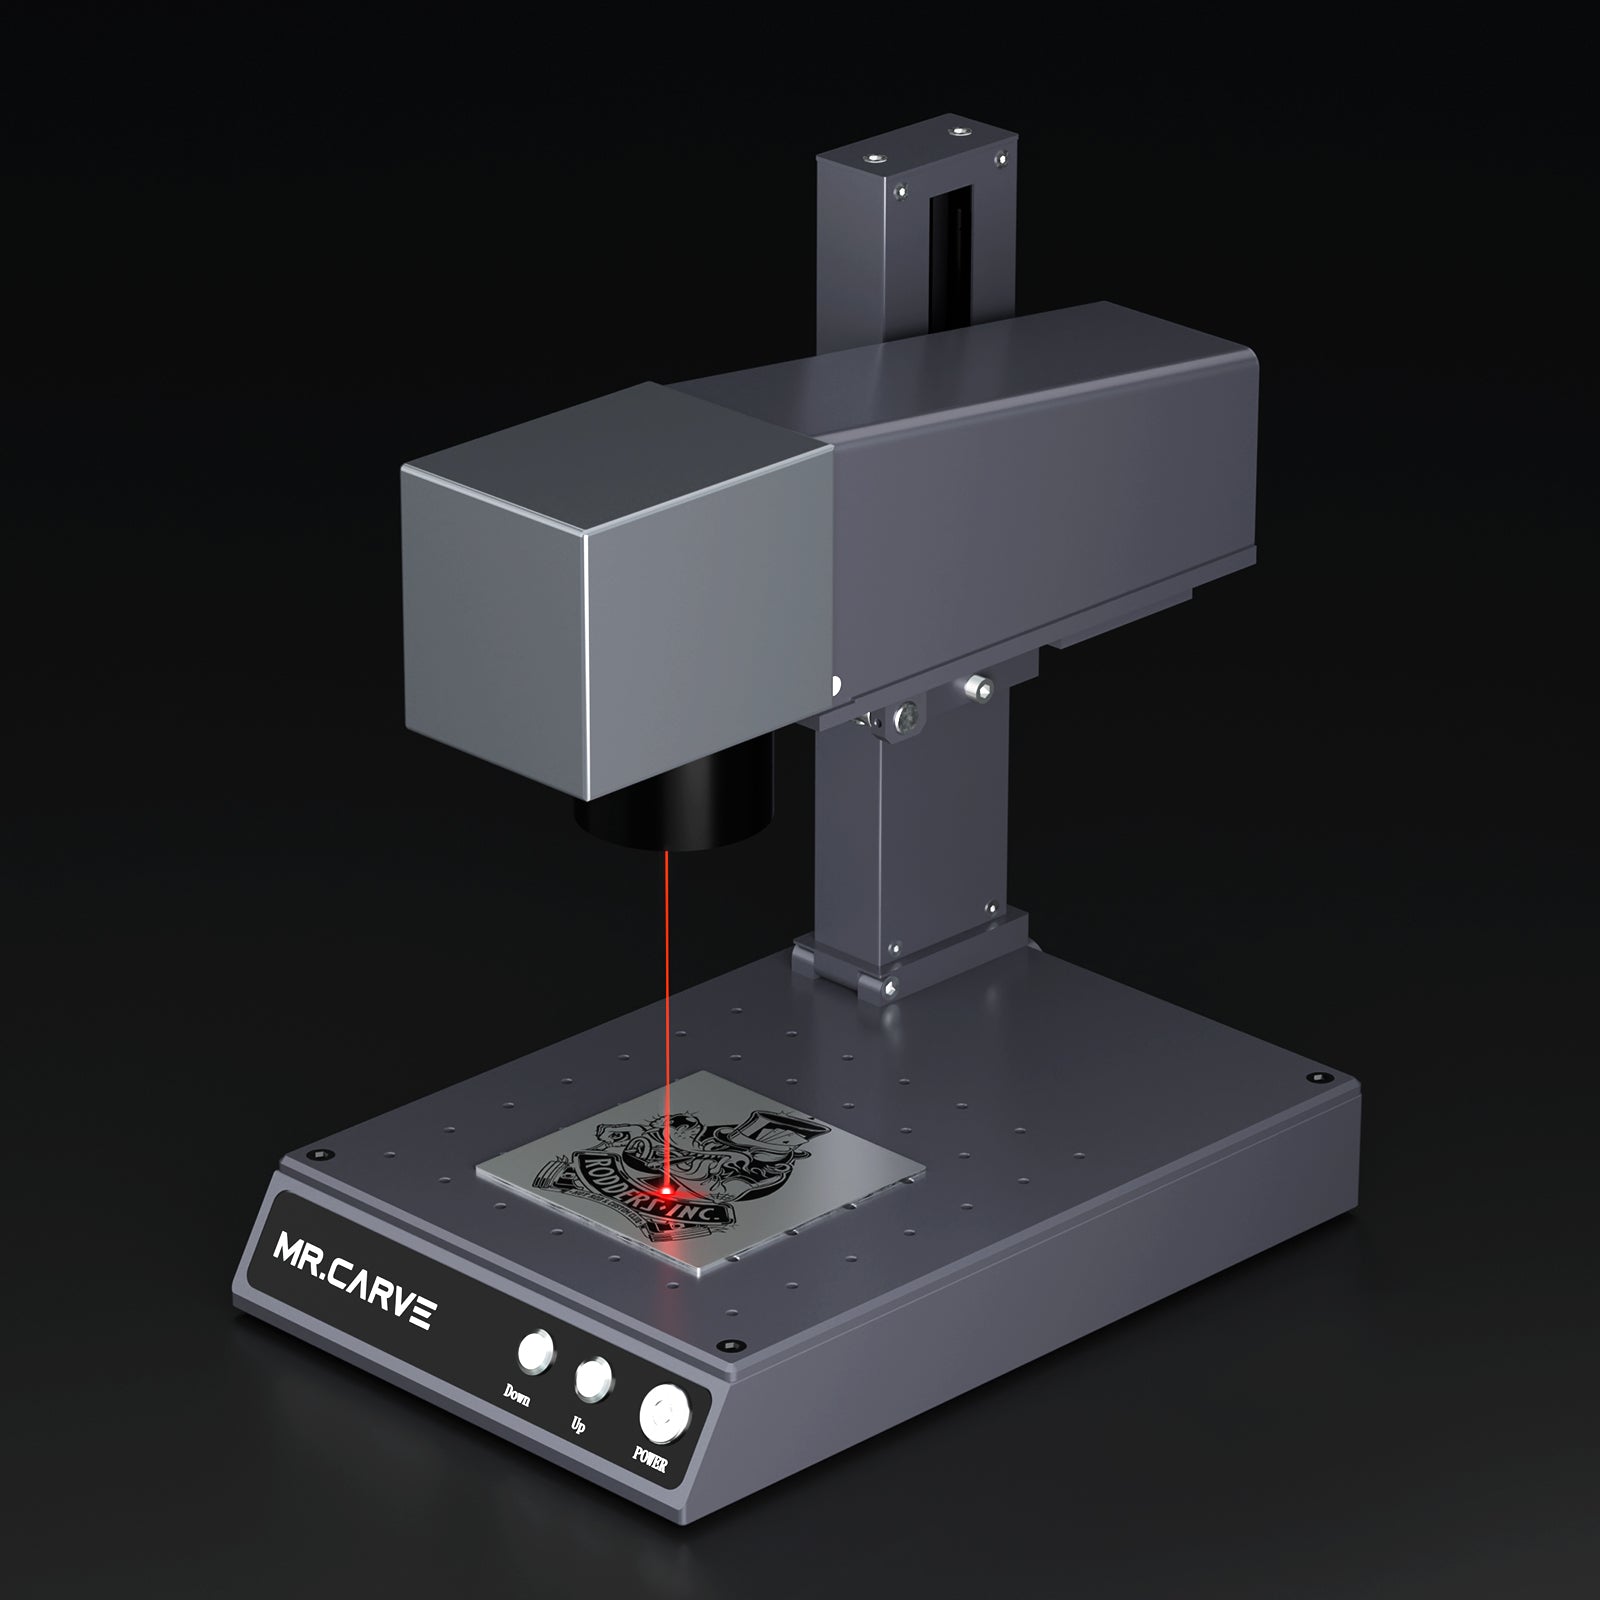 MR.CARVE M1 Pro Fiber Laser Marking Machine,All Metal Laser Engraver Machine with(70mm*70mm), 2 in 1 Industrial Grade &amp; Craft Grade Suitable for Factory Home Engraving